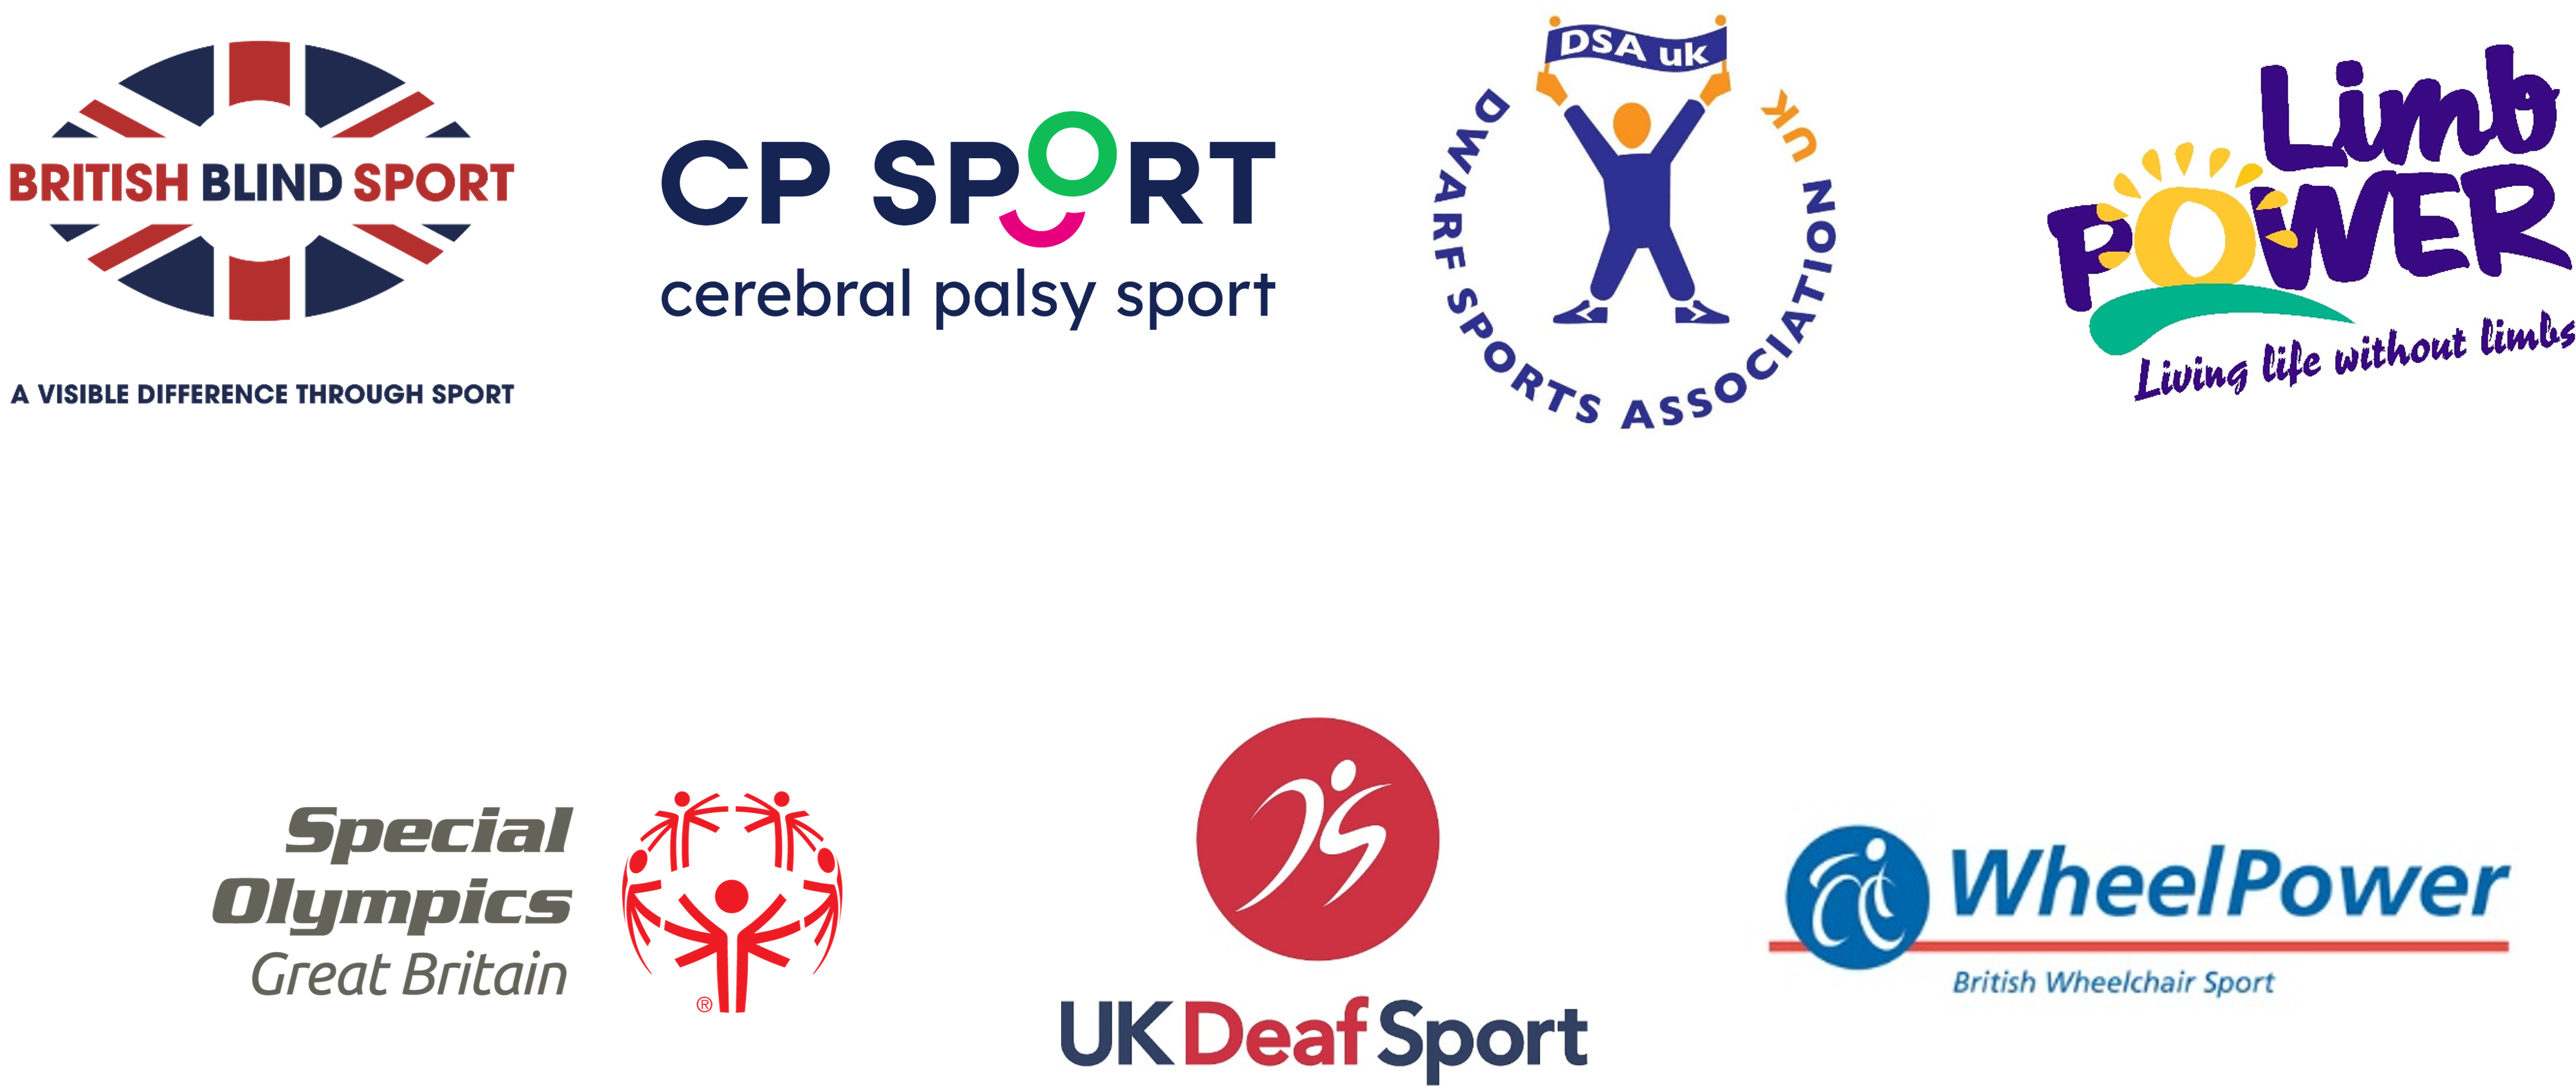 Logos for National Disability Sports Organisations: British Blind Sport, Cerebral Palsy Sport, Dwarf Sports Association UK, LimbPower, Special Olympics GB, UK Deaf Sport, WheelPower